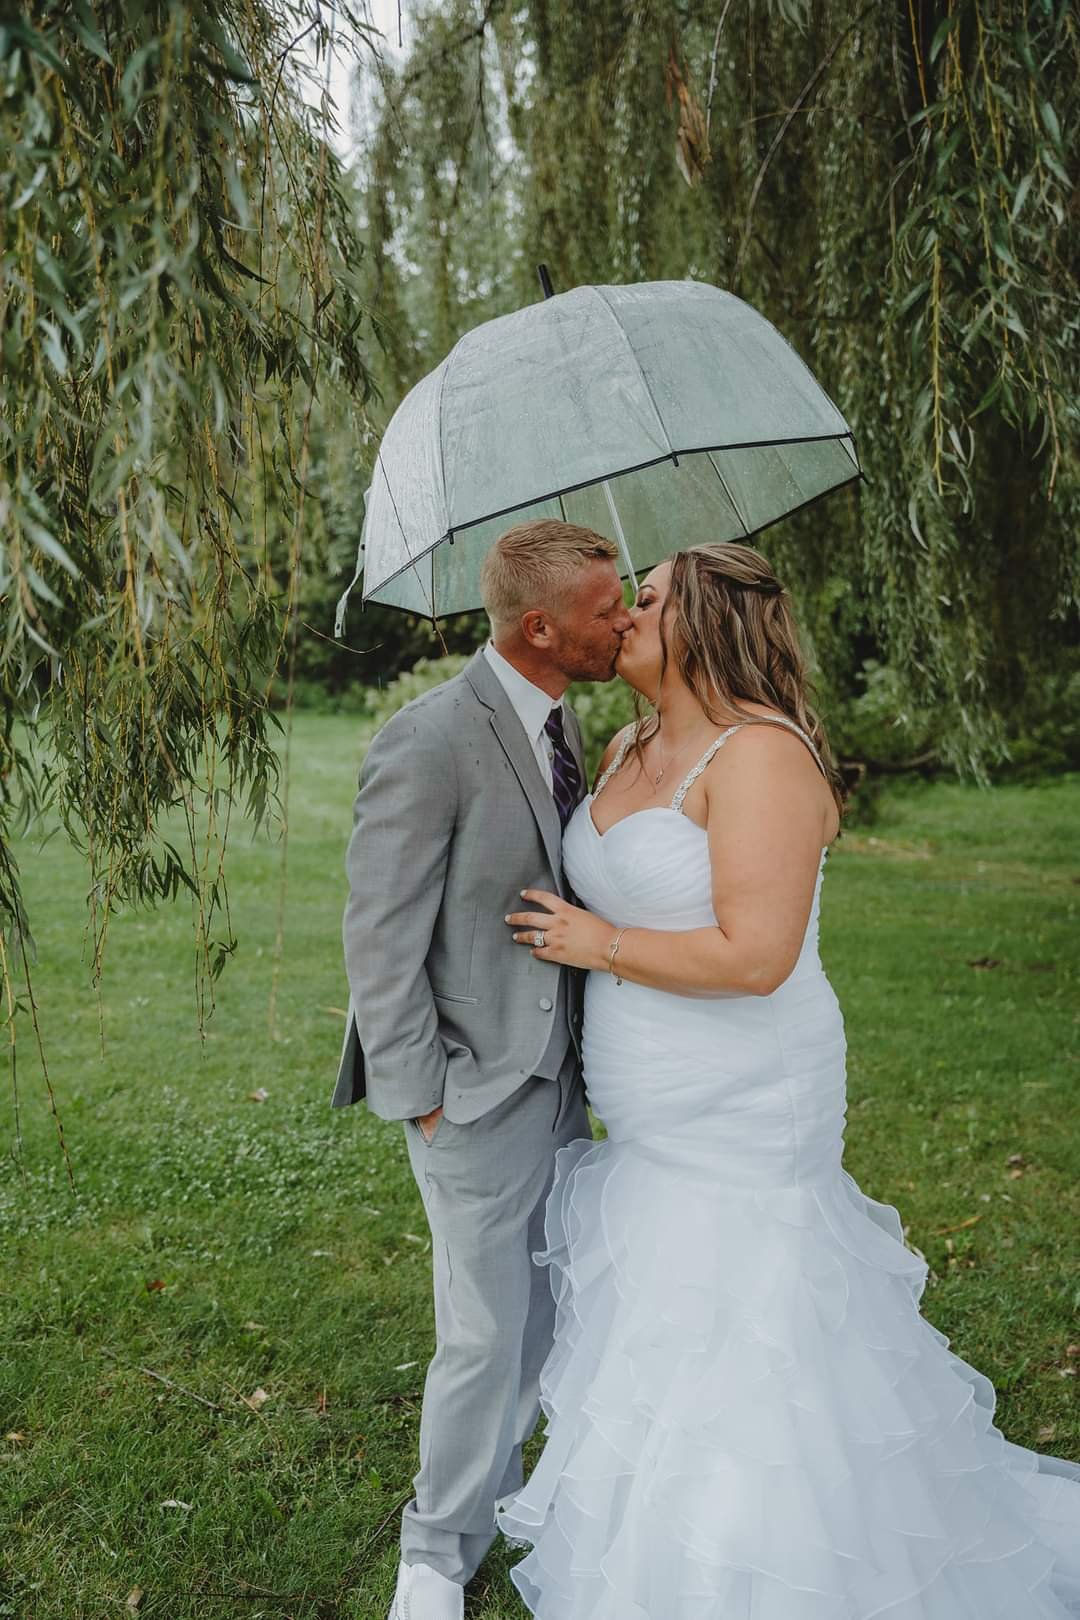 Wedding Photo - kissing under umbrella.jpg